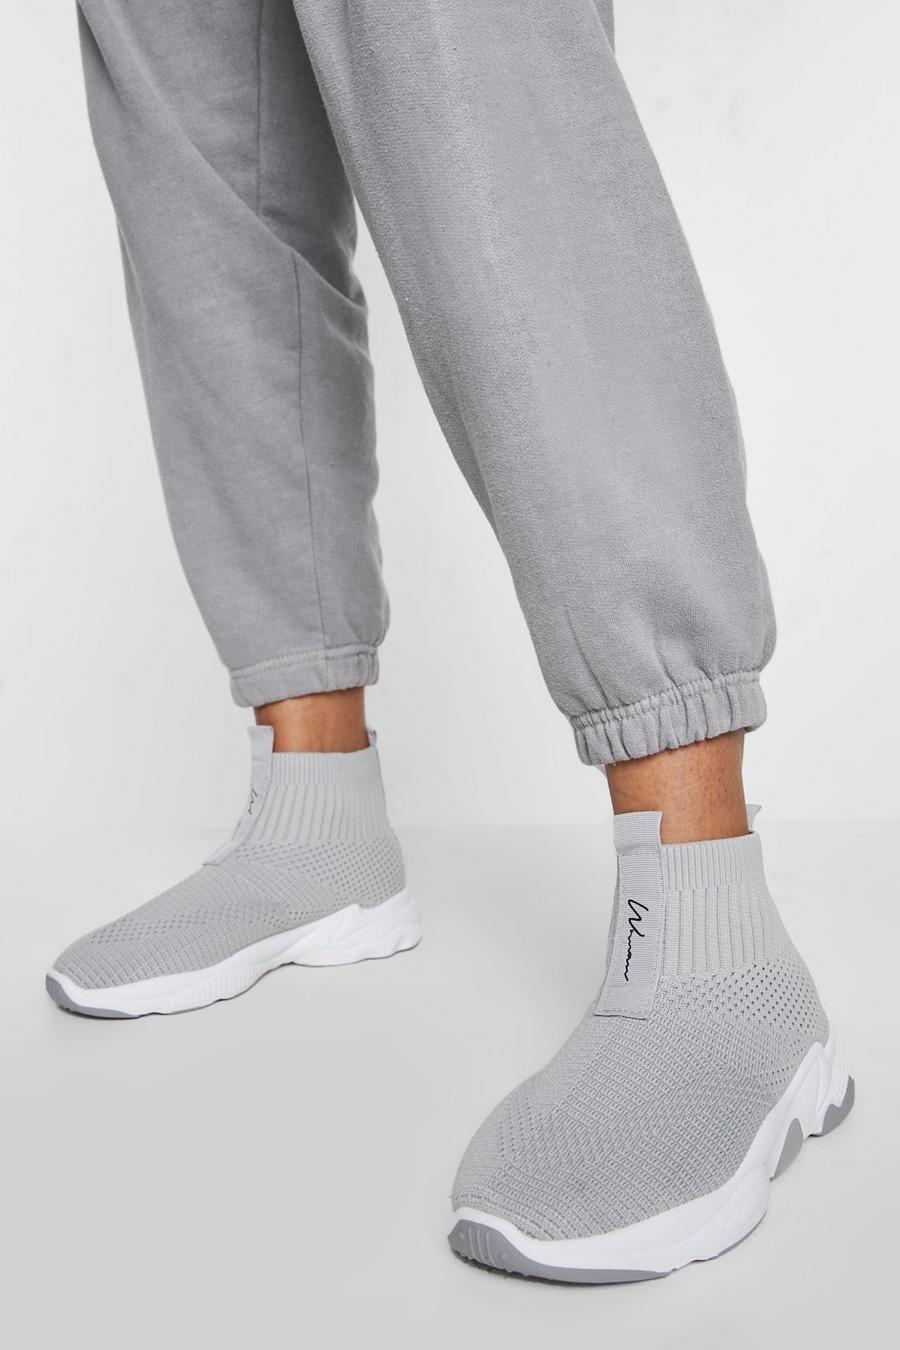 Botas calcetín de holgura ancha con suela gruesa, Grey